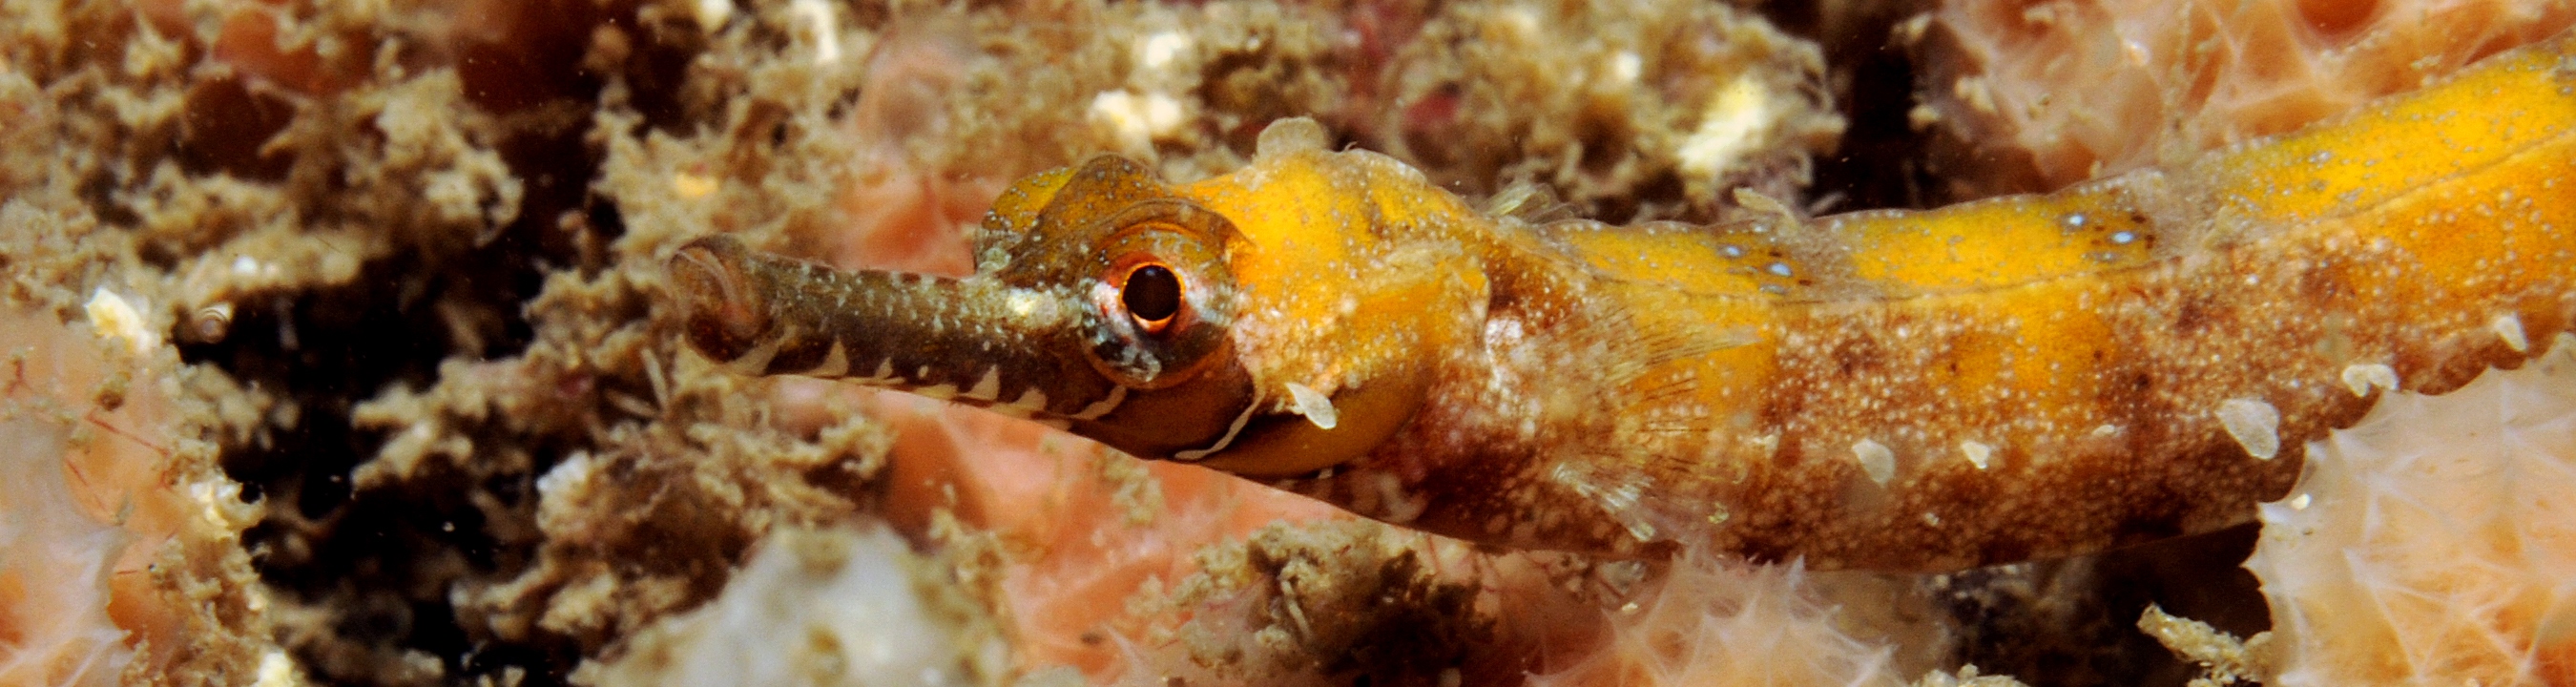 Girdled Pipefish (Festucalex cinctus) Image by Dave Harasti